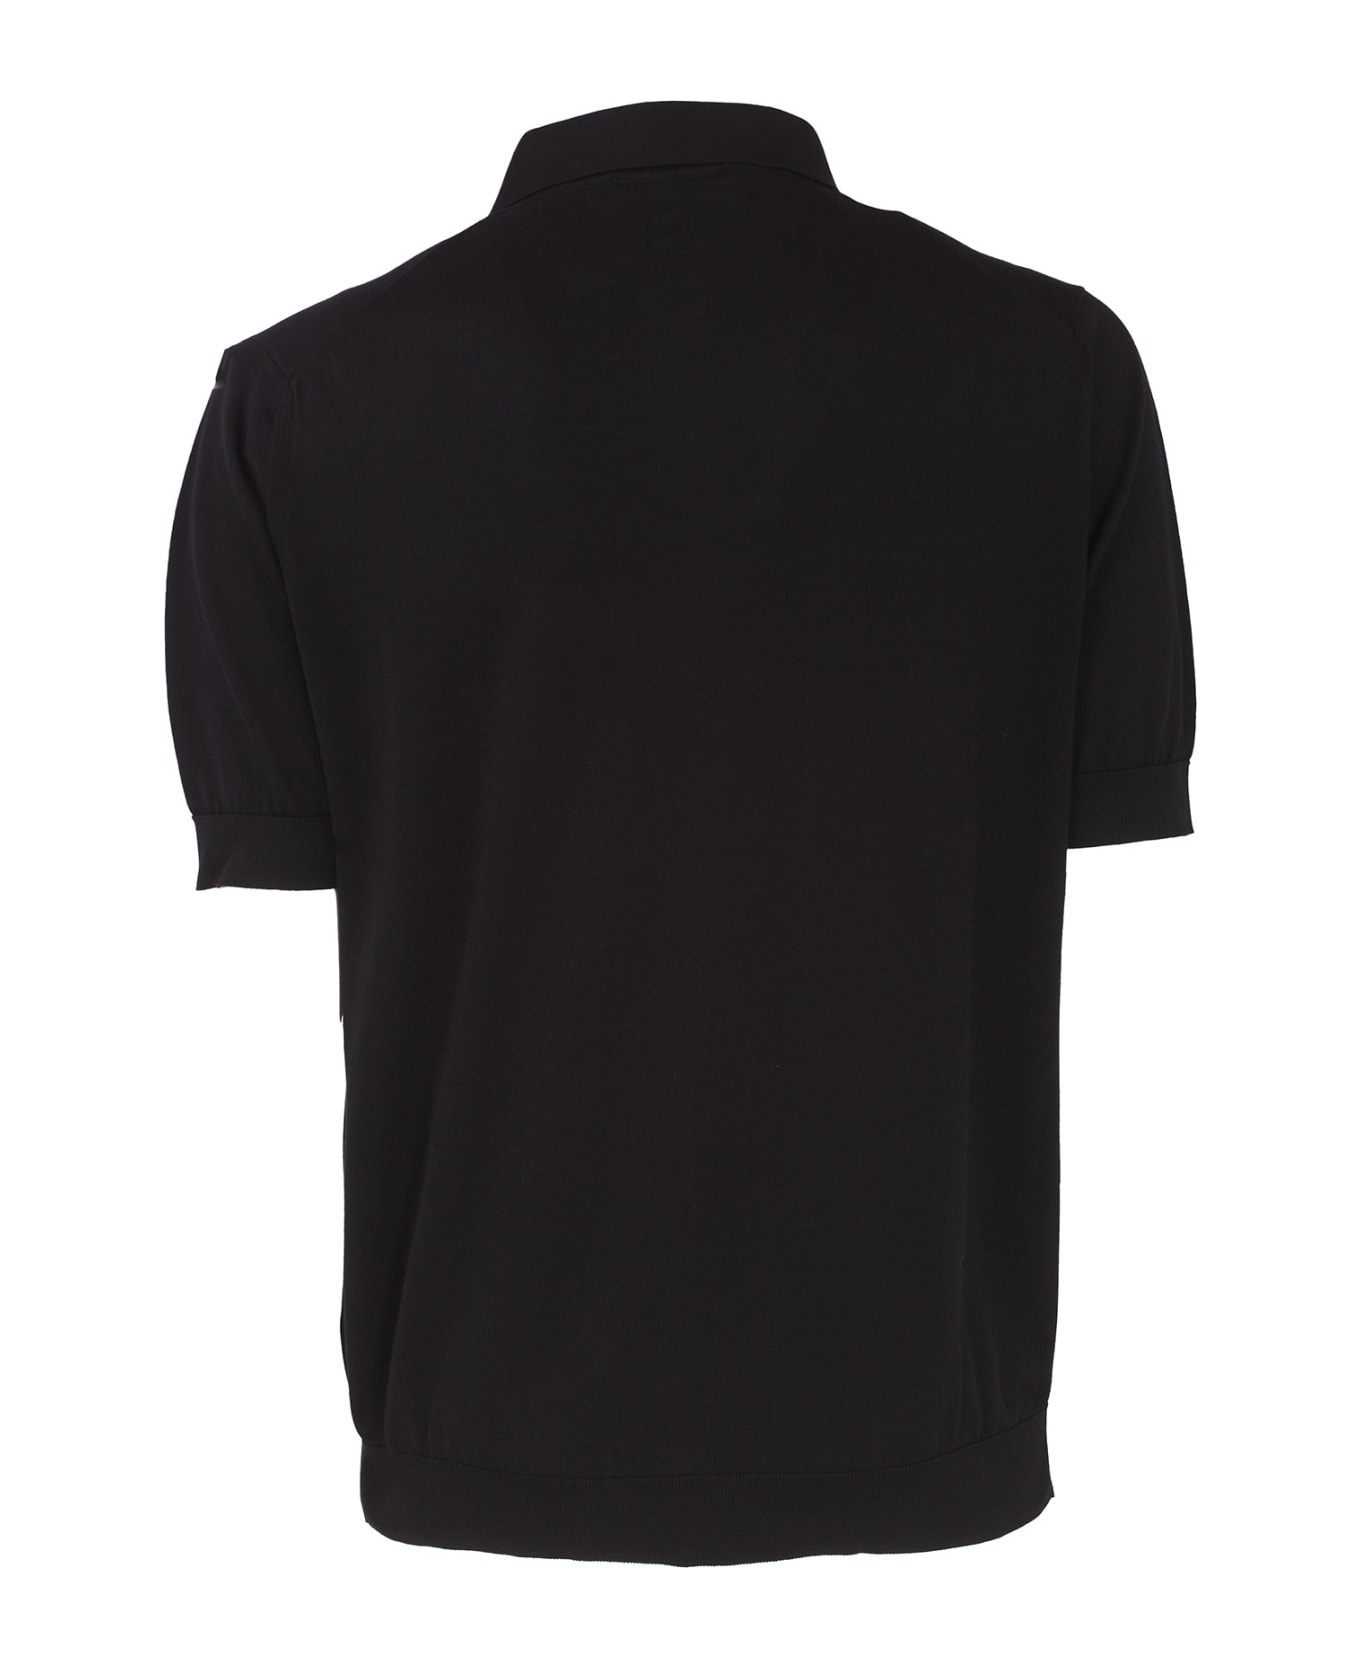 Lardini T-shirts And Polos Black - Black ポロシャツ